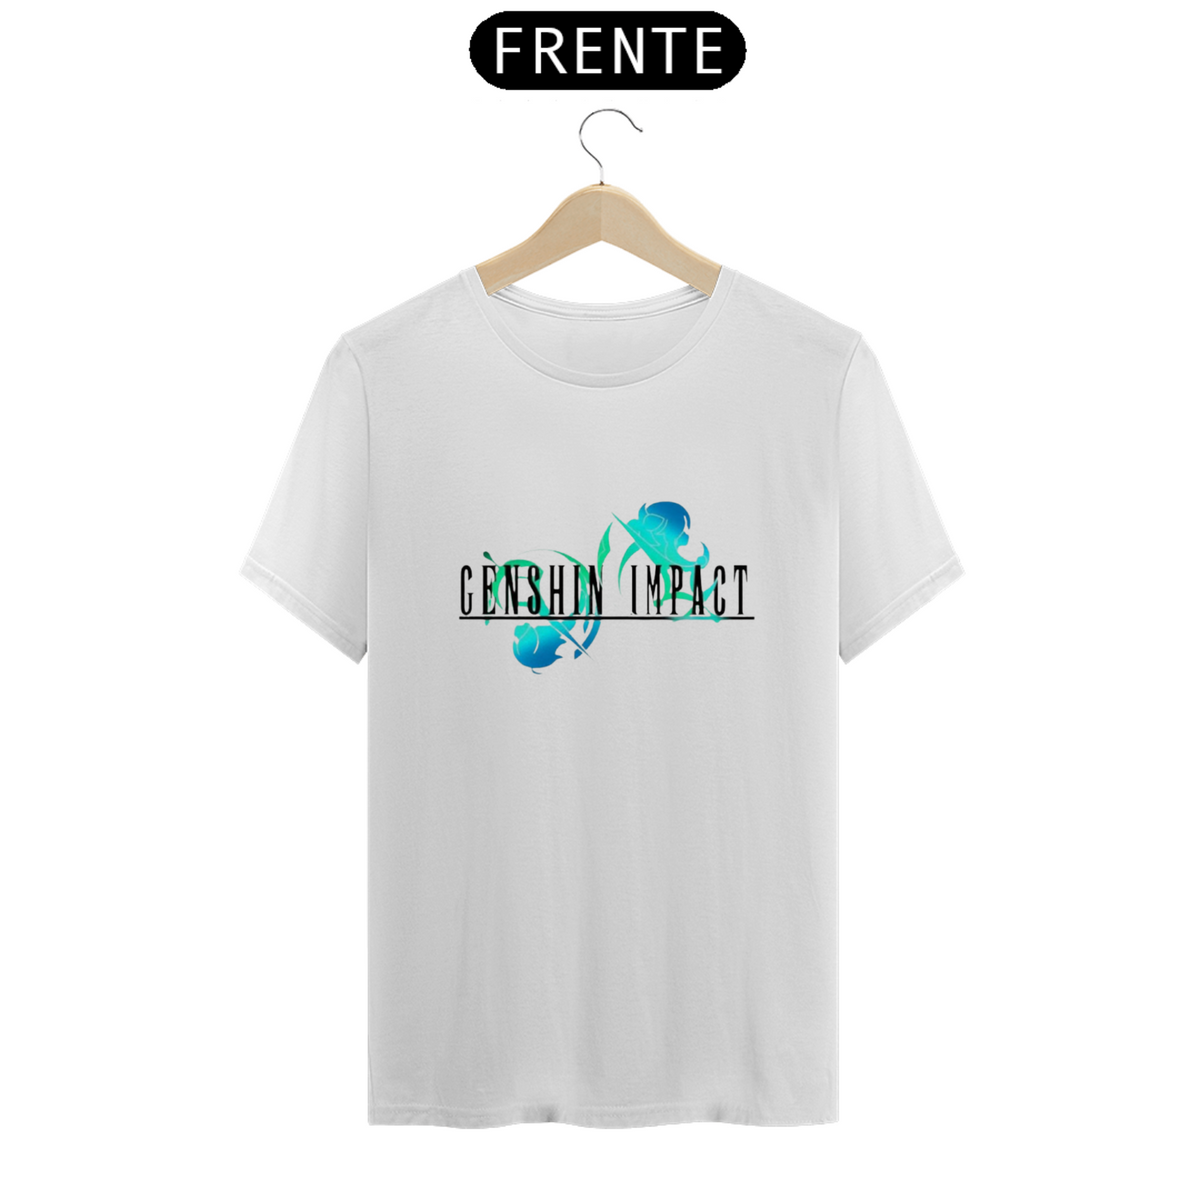 Nome do produto: Camiseta T-Shirt Classic Unissex / Genshin Impact